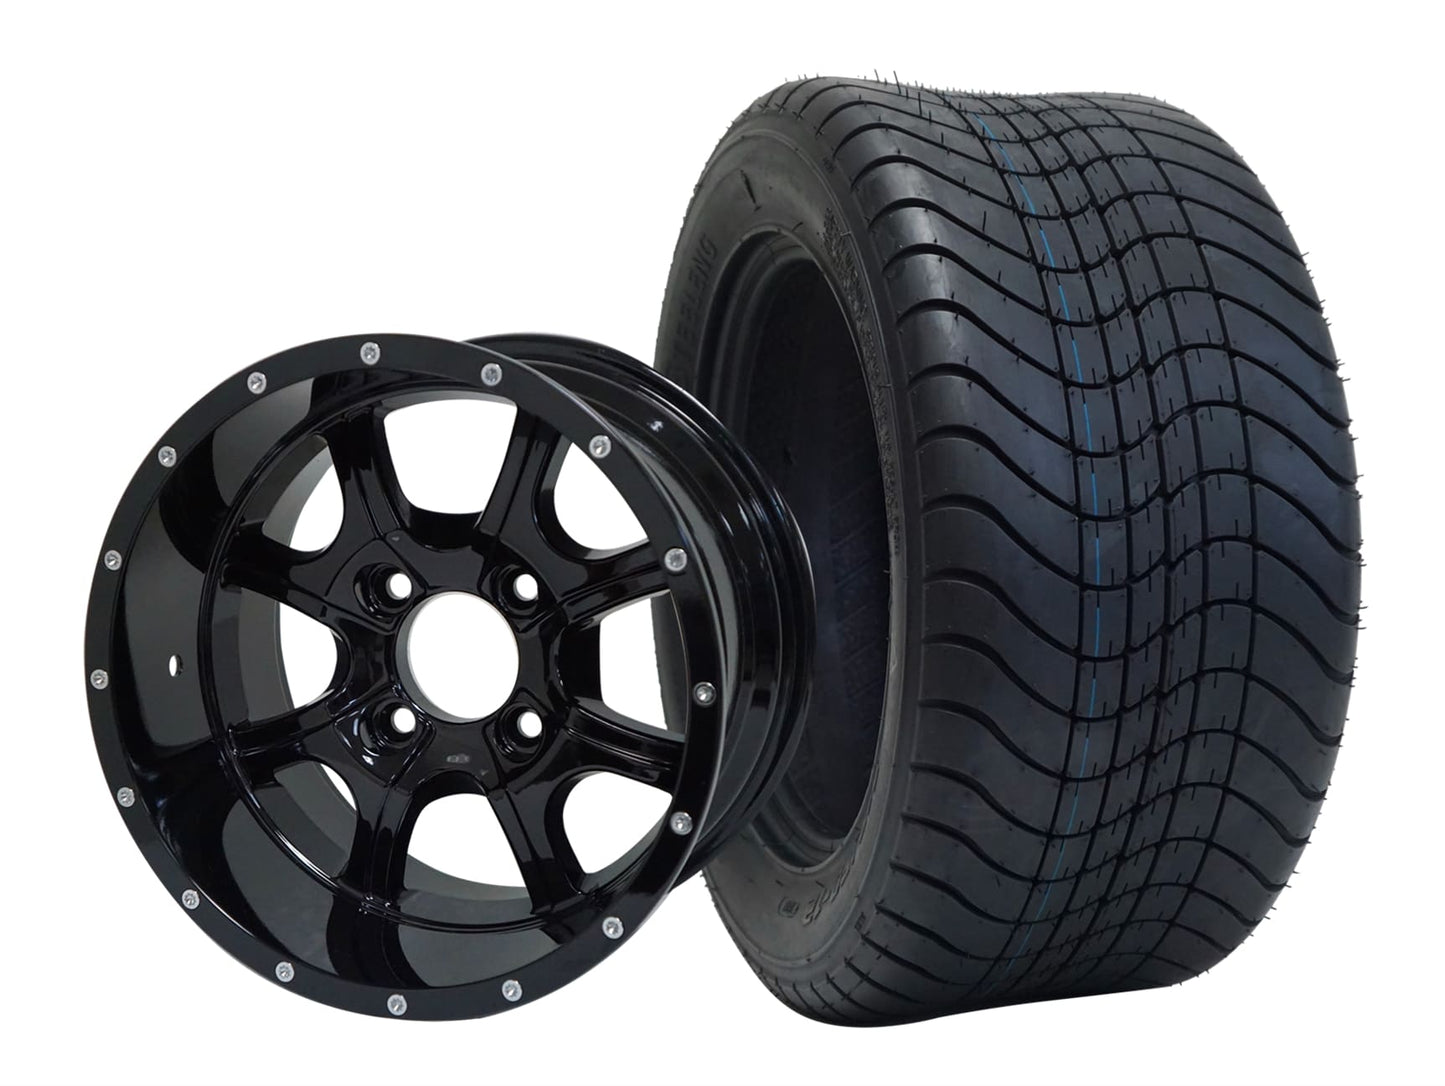 BNDL-TR1213-WH1221-LN0002-CC0002 – SGC 12″ Night Stalker Glossy Black Wheel – Aluminum Alloy / STEELENG 215/50-12 Comfort Ride Street Tire DOT Approved - Set of 4